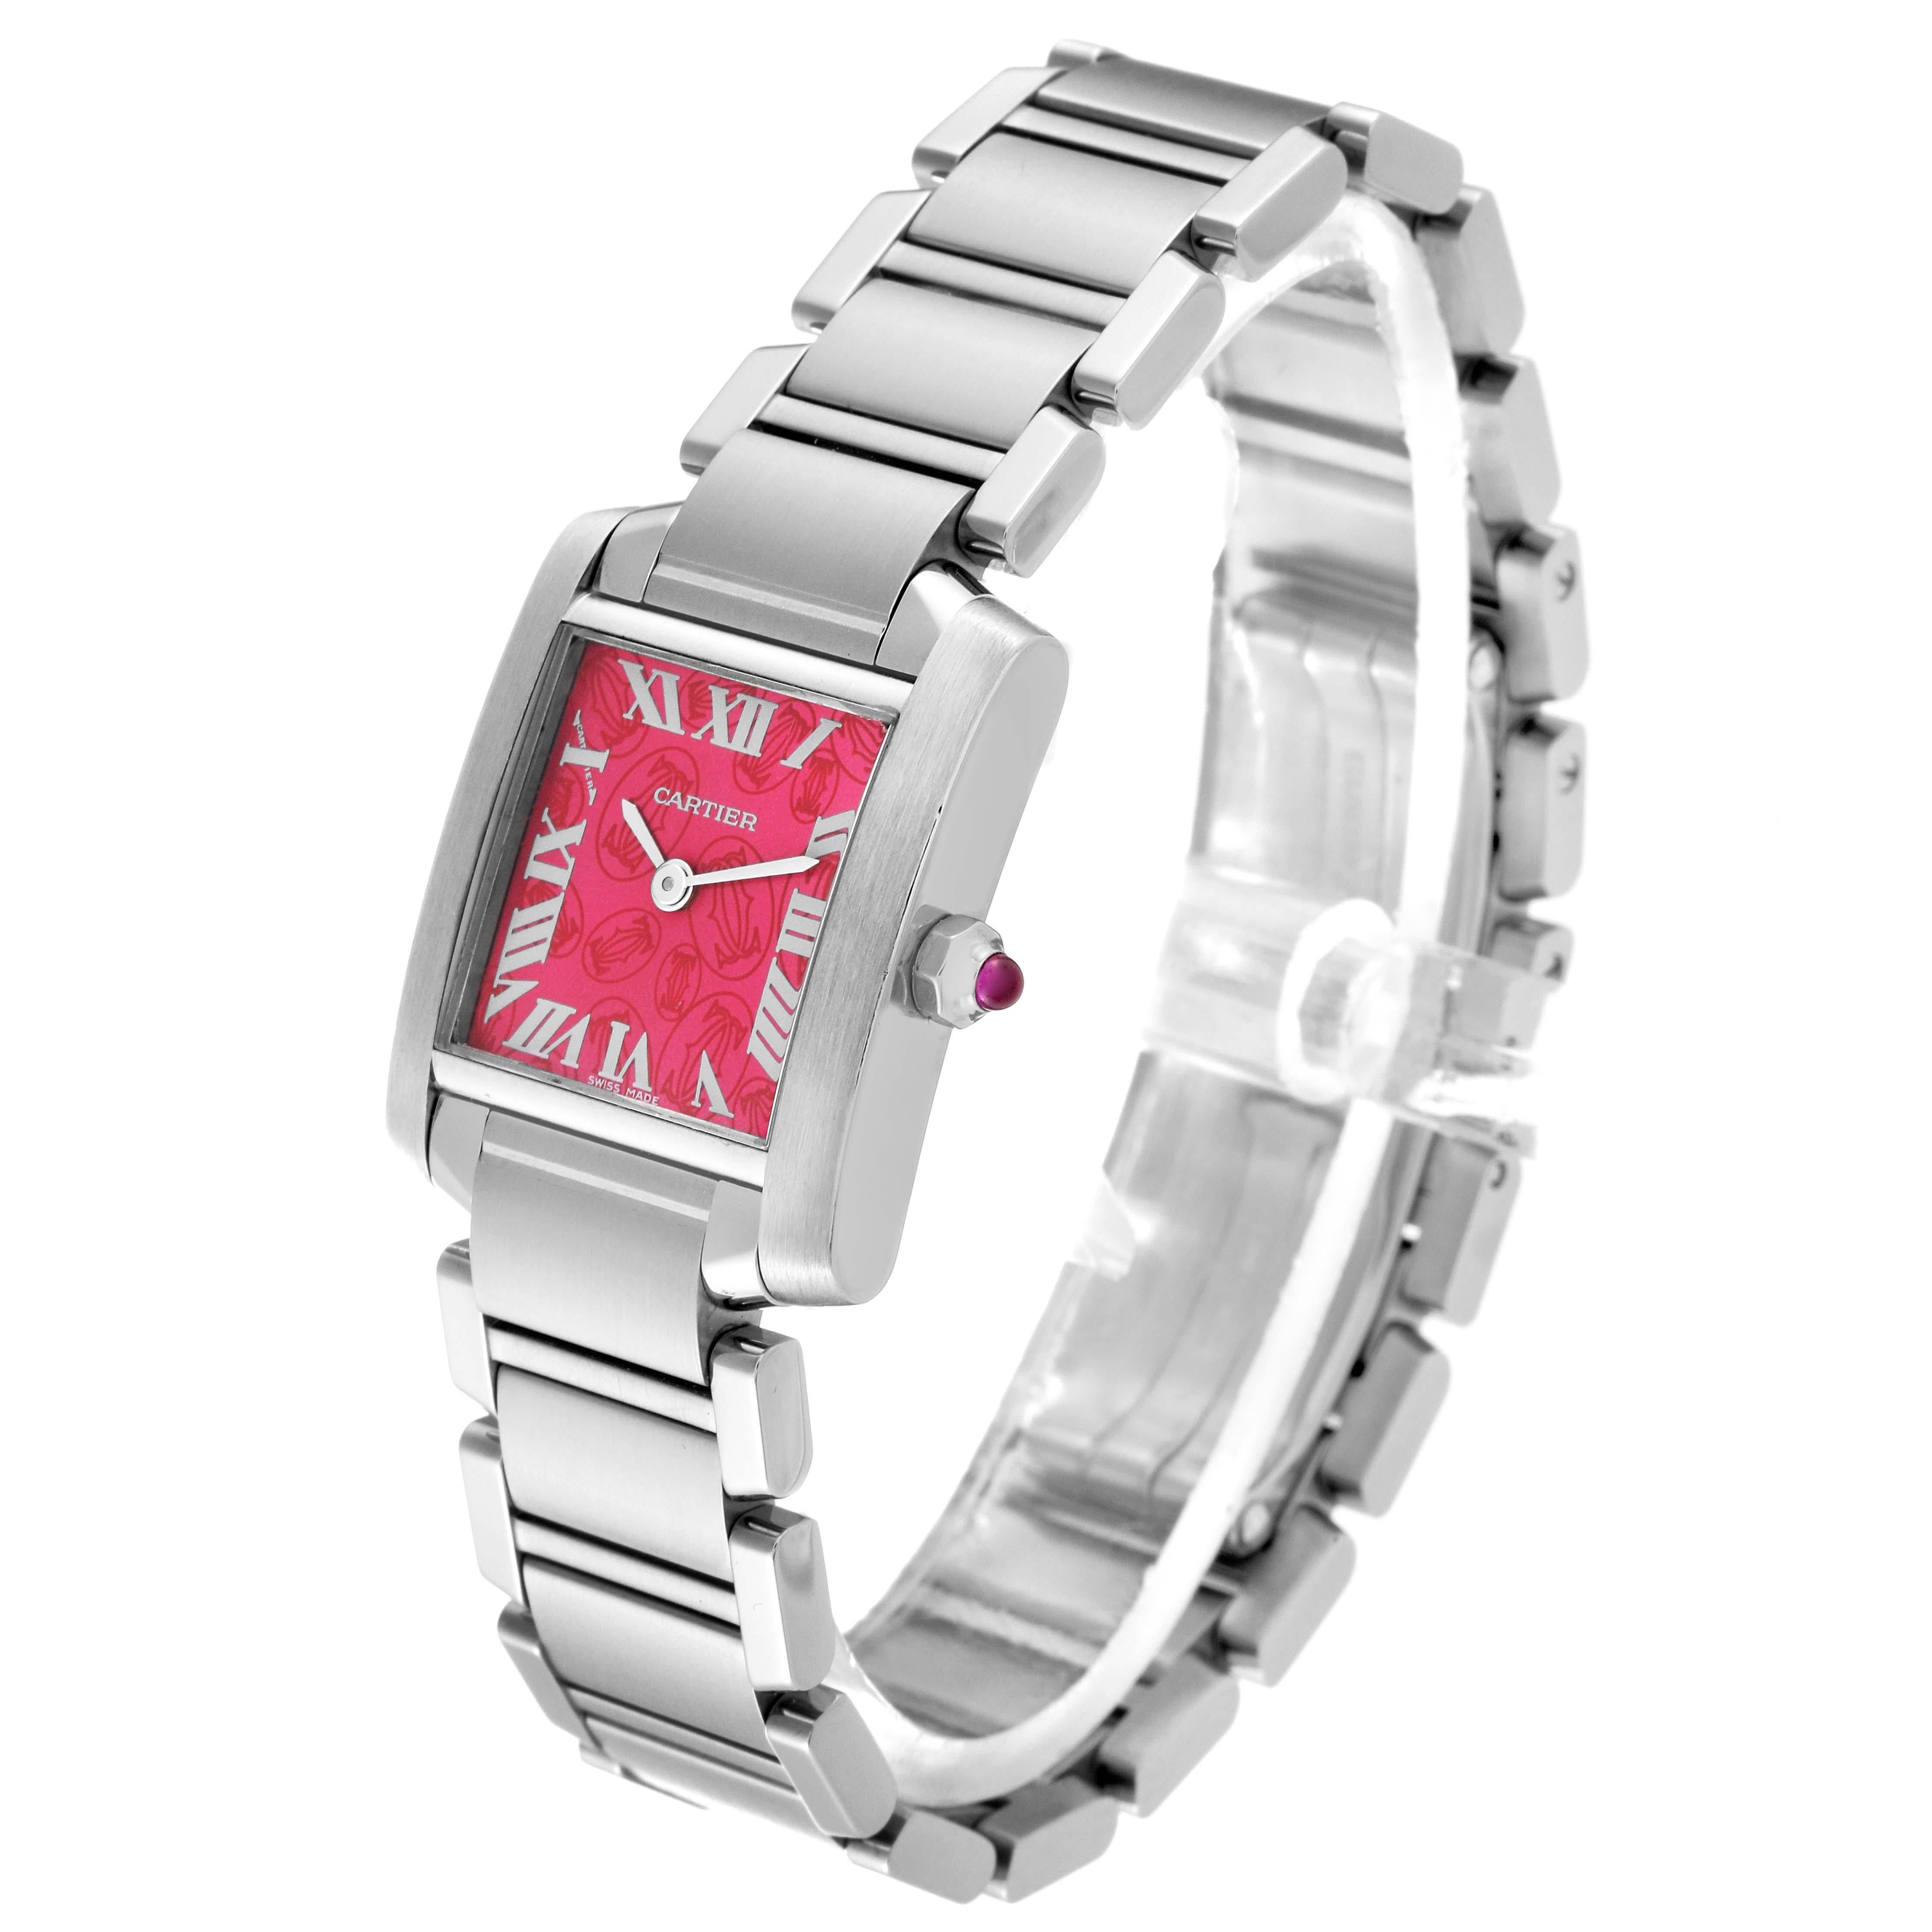 Cartier Tank Francaise Raspberry Dial LE Steel Ladies Watch W51030Q3 For Sale 2